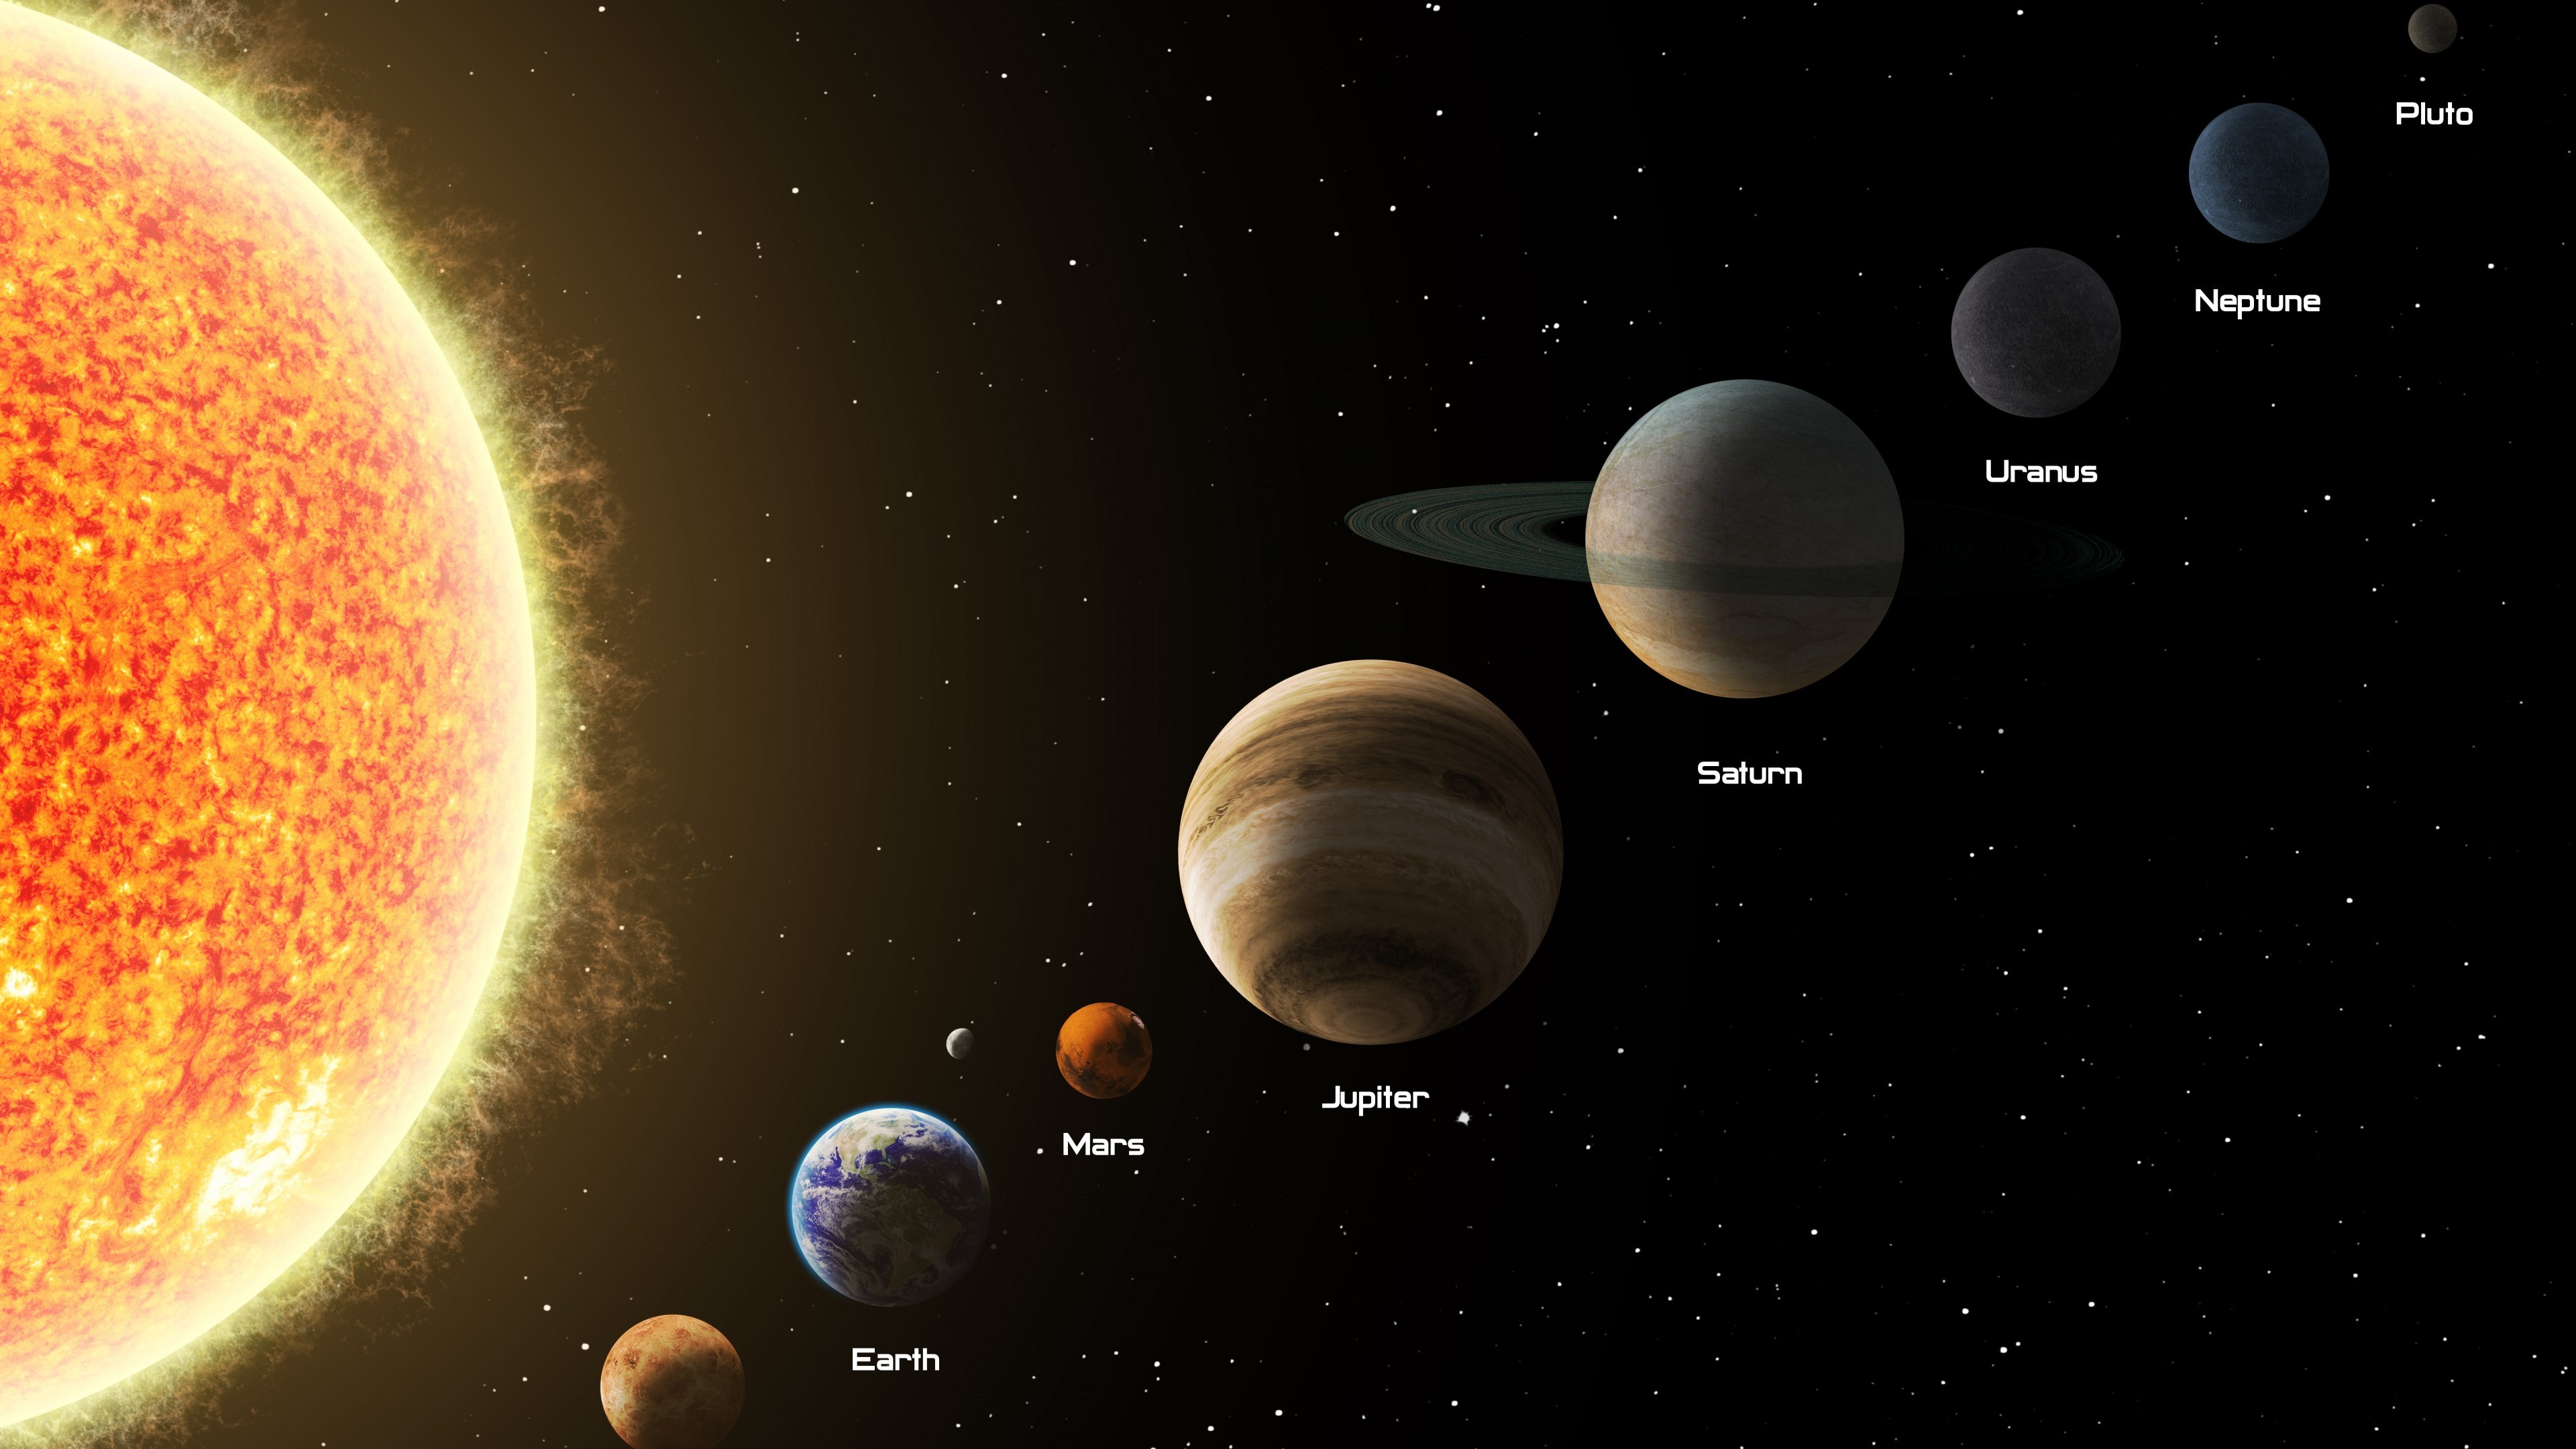 papel tapiz del sistema solar,espacio exterior,planeta,objeto astronómico,astronomía,atmósfera